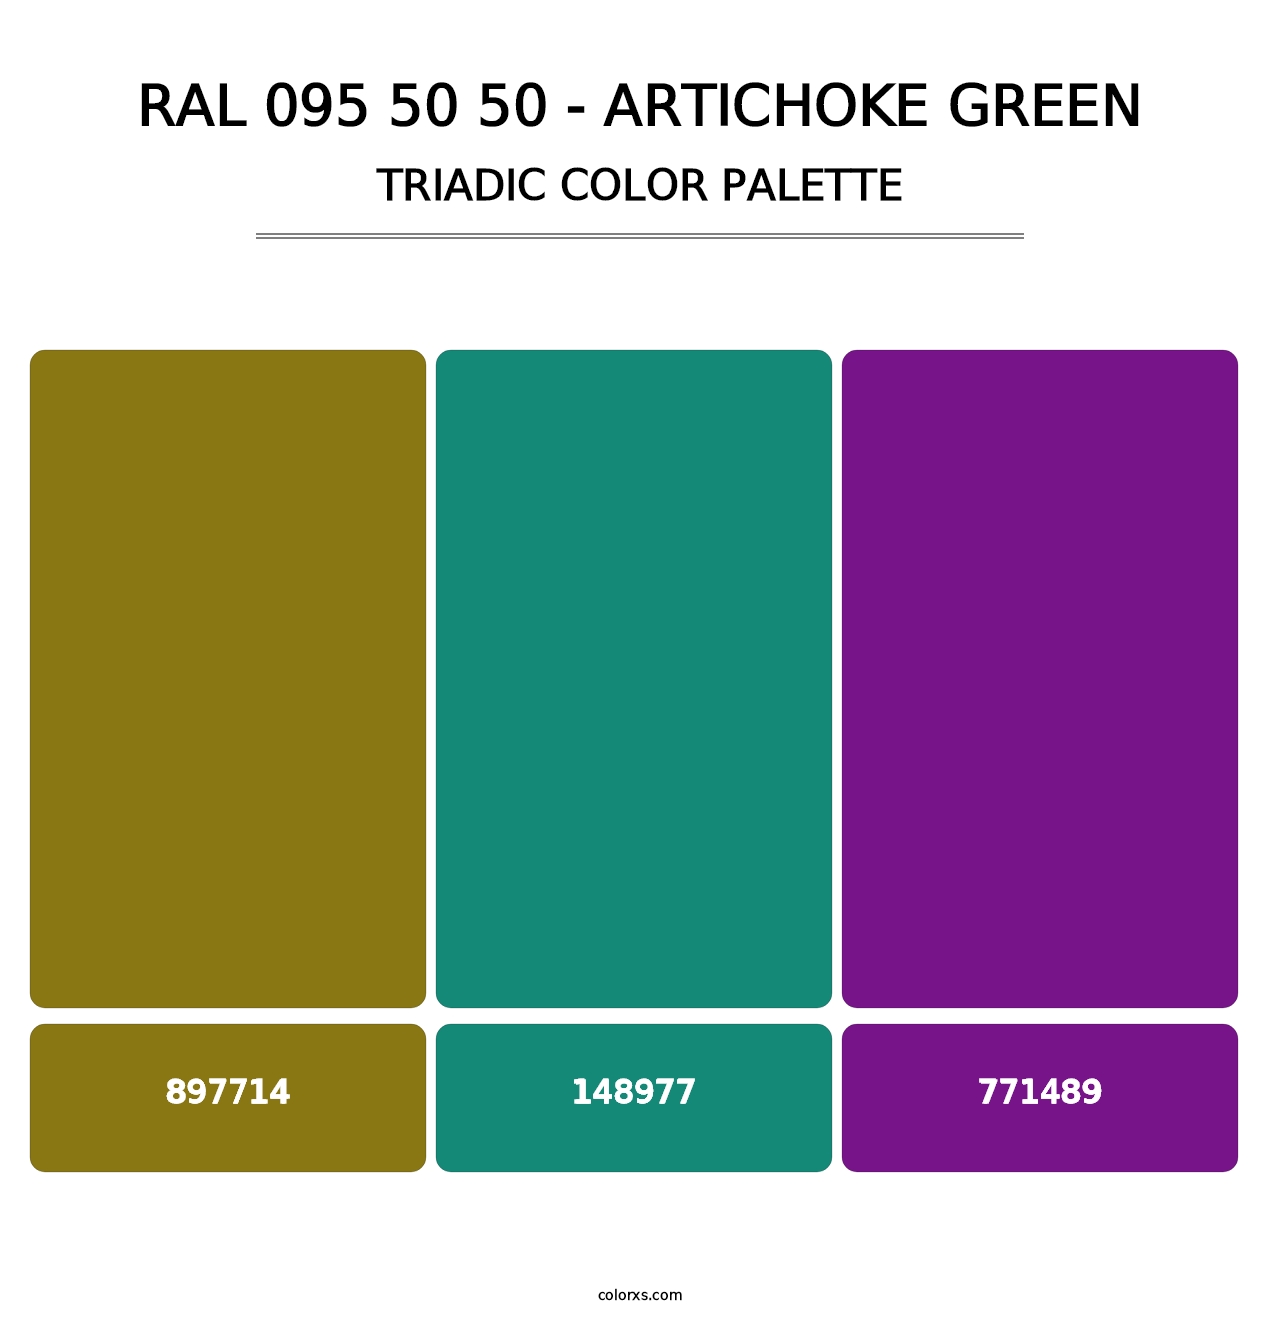 RAL 095 50 50 - Artichoke Green - Triadic Color Palette